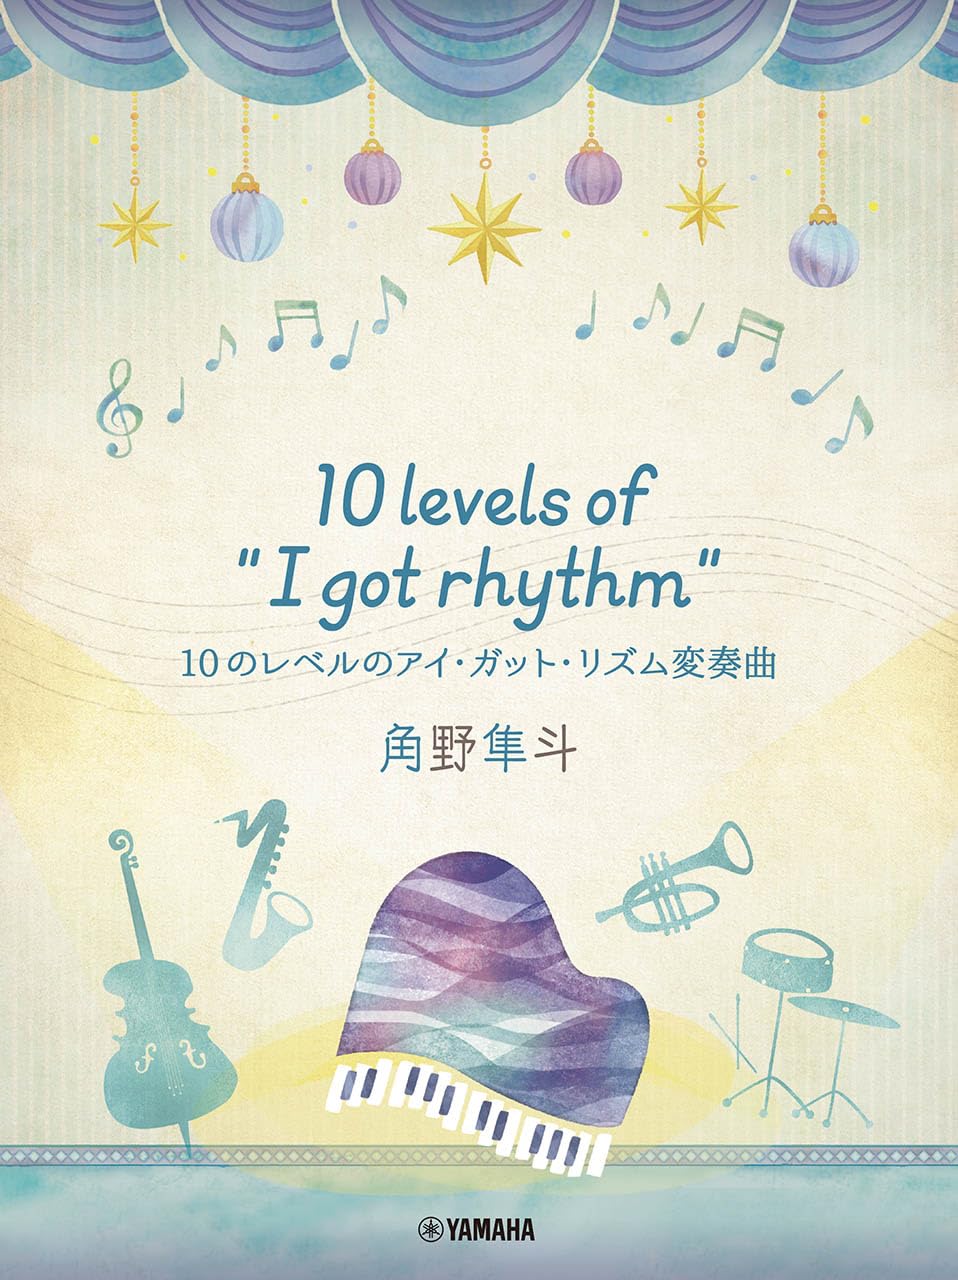 Hayato Sumino: 10 levels of "I got rhythm" for Piano Solo (Advanced)